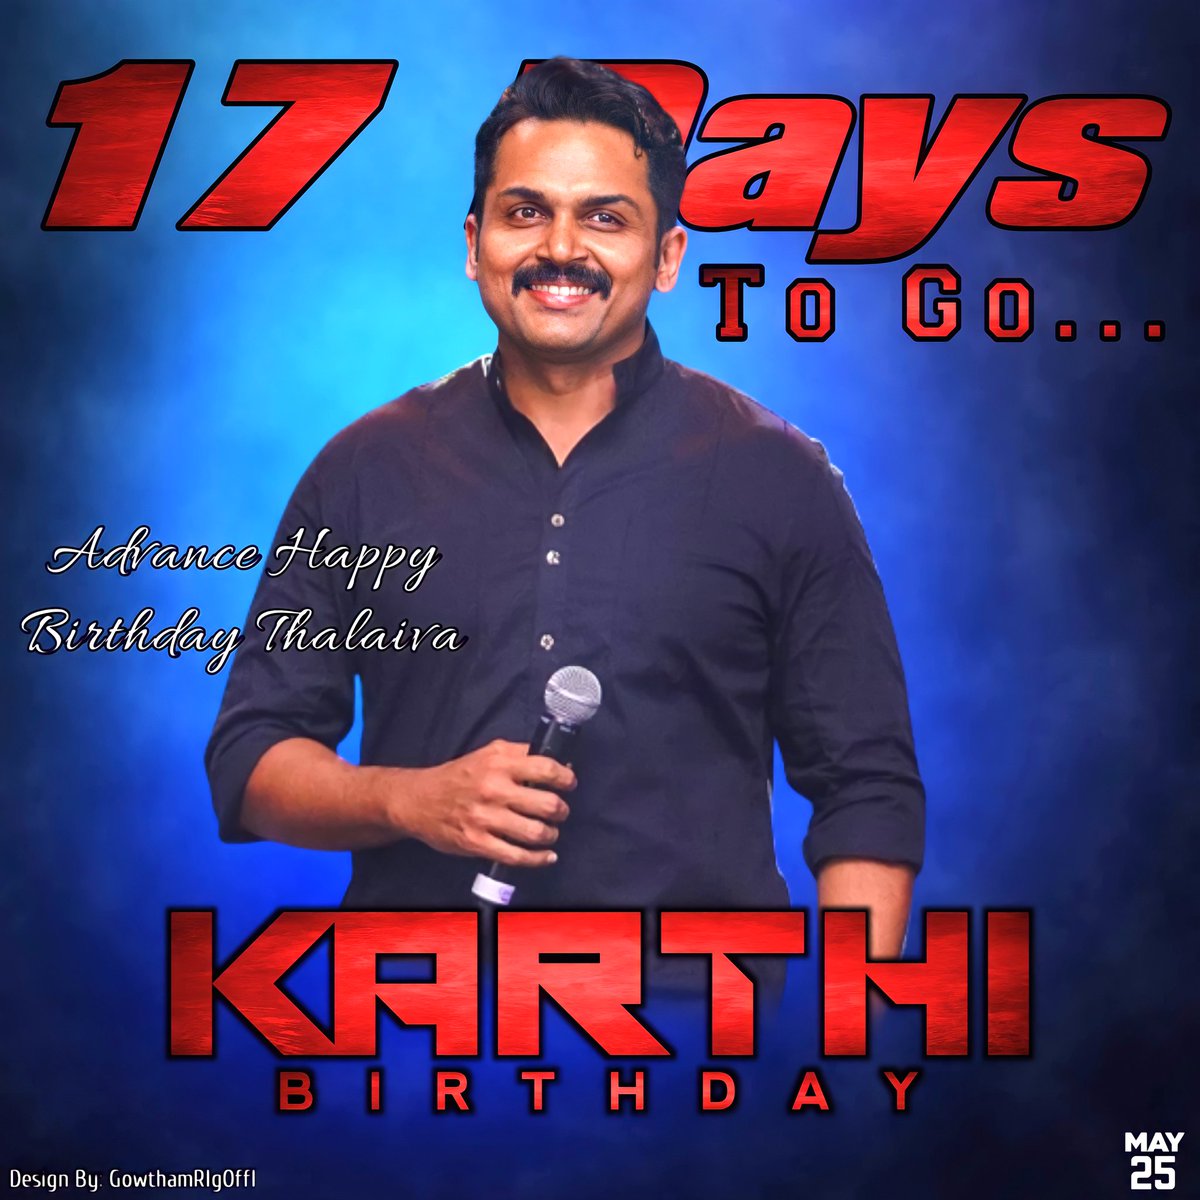 My Design Work #RLGcreation #GowthamRlg | 17 Days To Go Puratchi Veeran #Karthi Anna Birthday | Advance Happy Birthday Thalaiva | #KanjaPoovuKannala #VirumanFirstSinglePromo: youtu.be/nbVsmTkMn_A | @Karthi_Offl @Karthi_AIFC @prabhu_sr @GowthamRlgOffl 

#17DaysToGoKarthiBDay